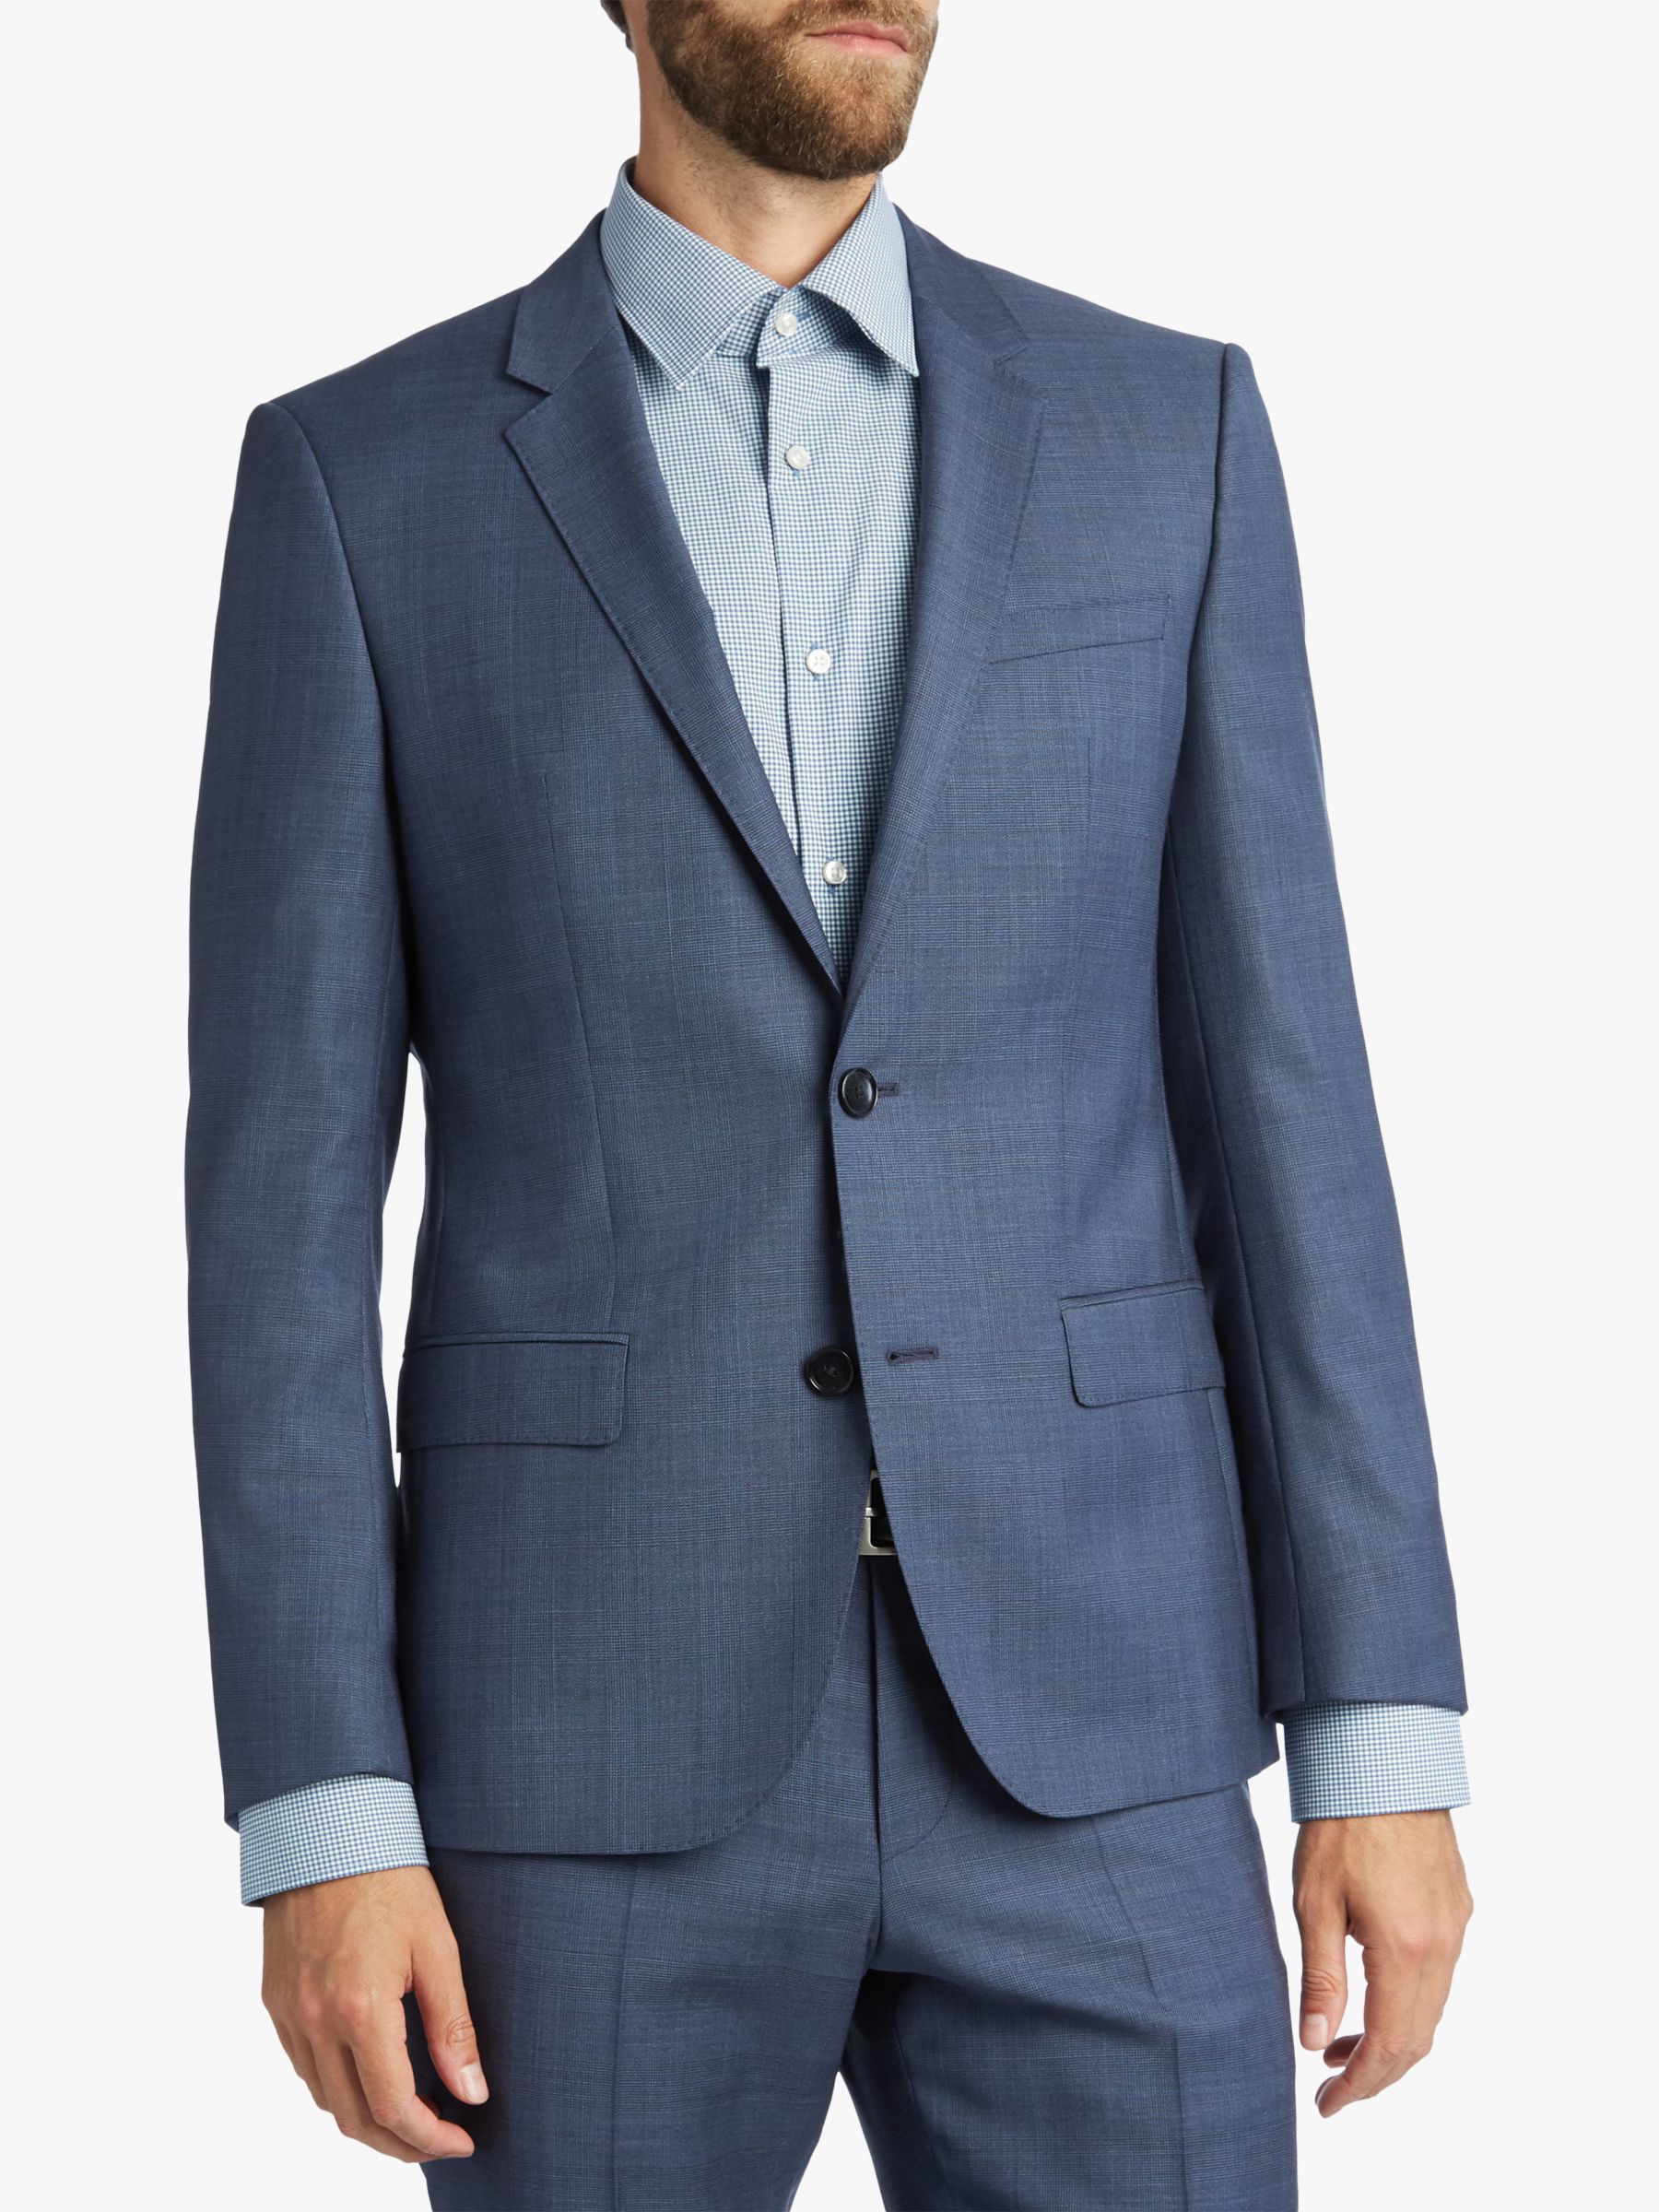 Hugo Boss Henry Suit Jacket, Blue 